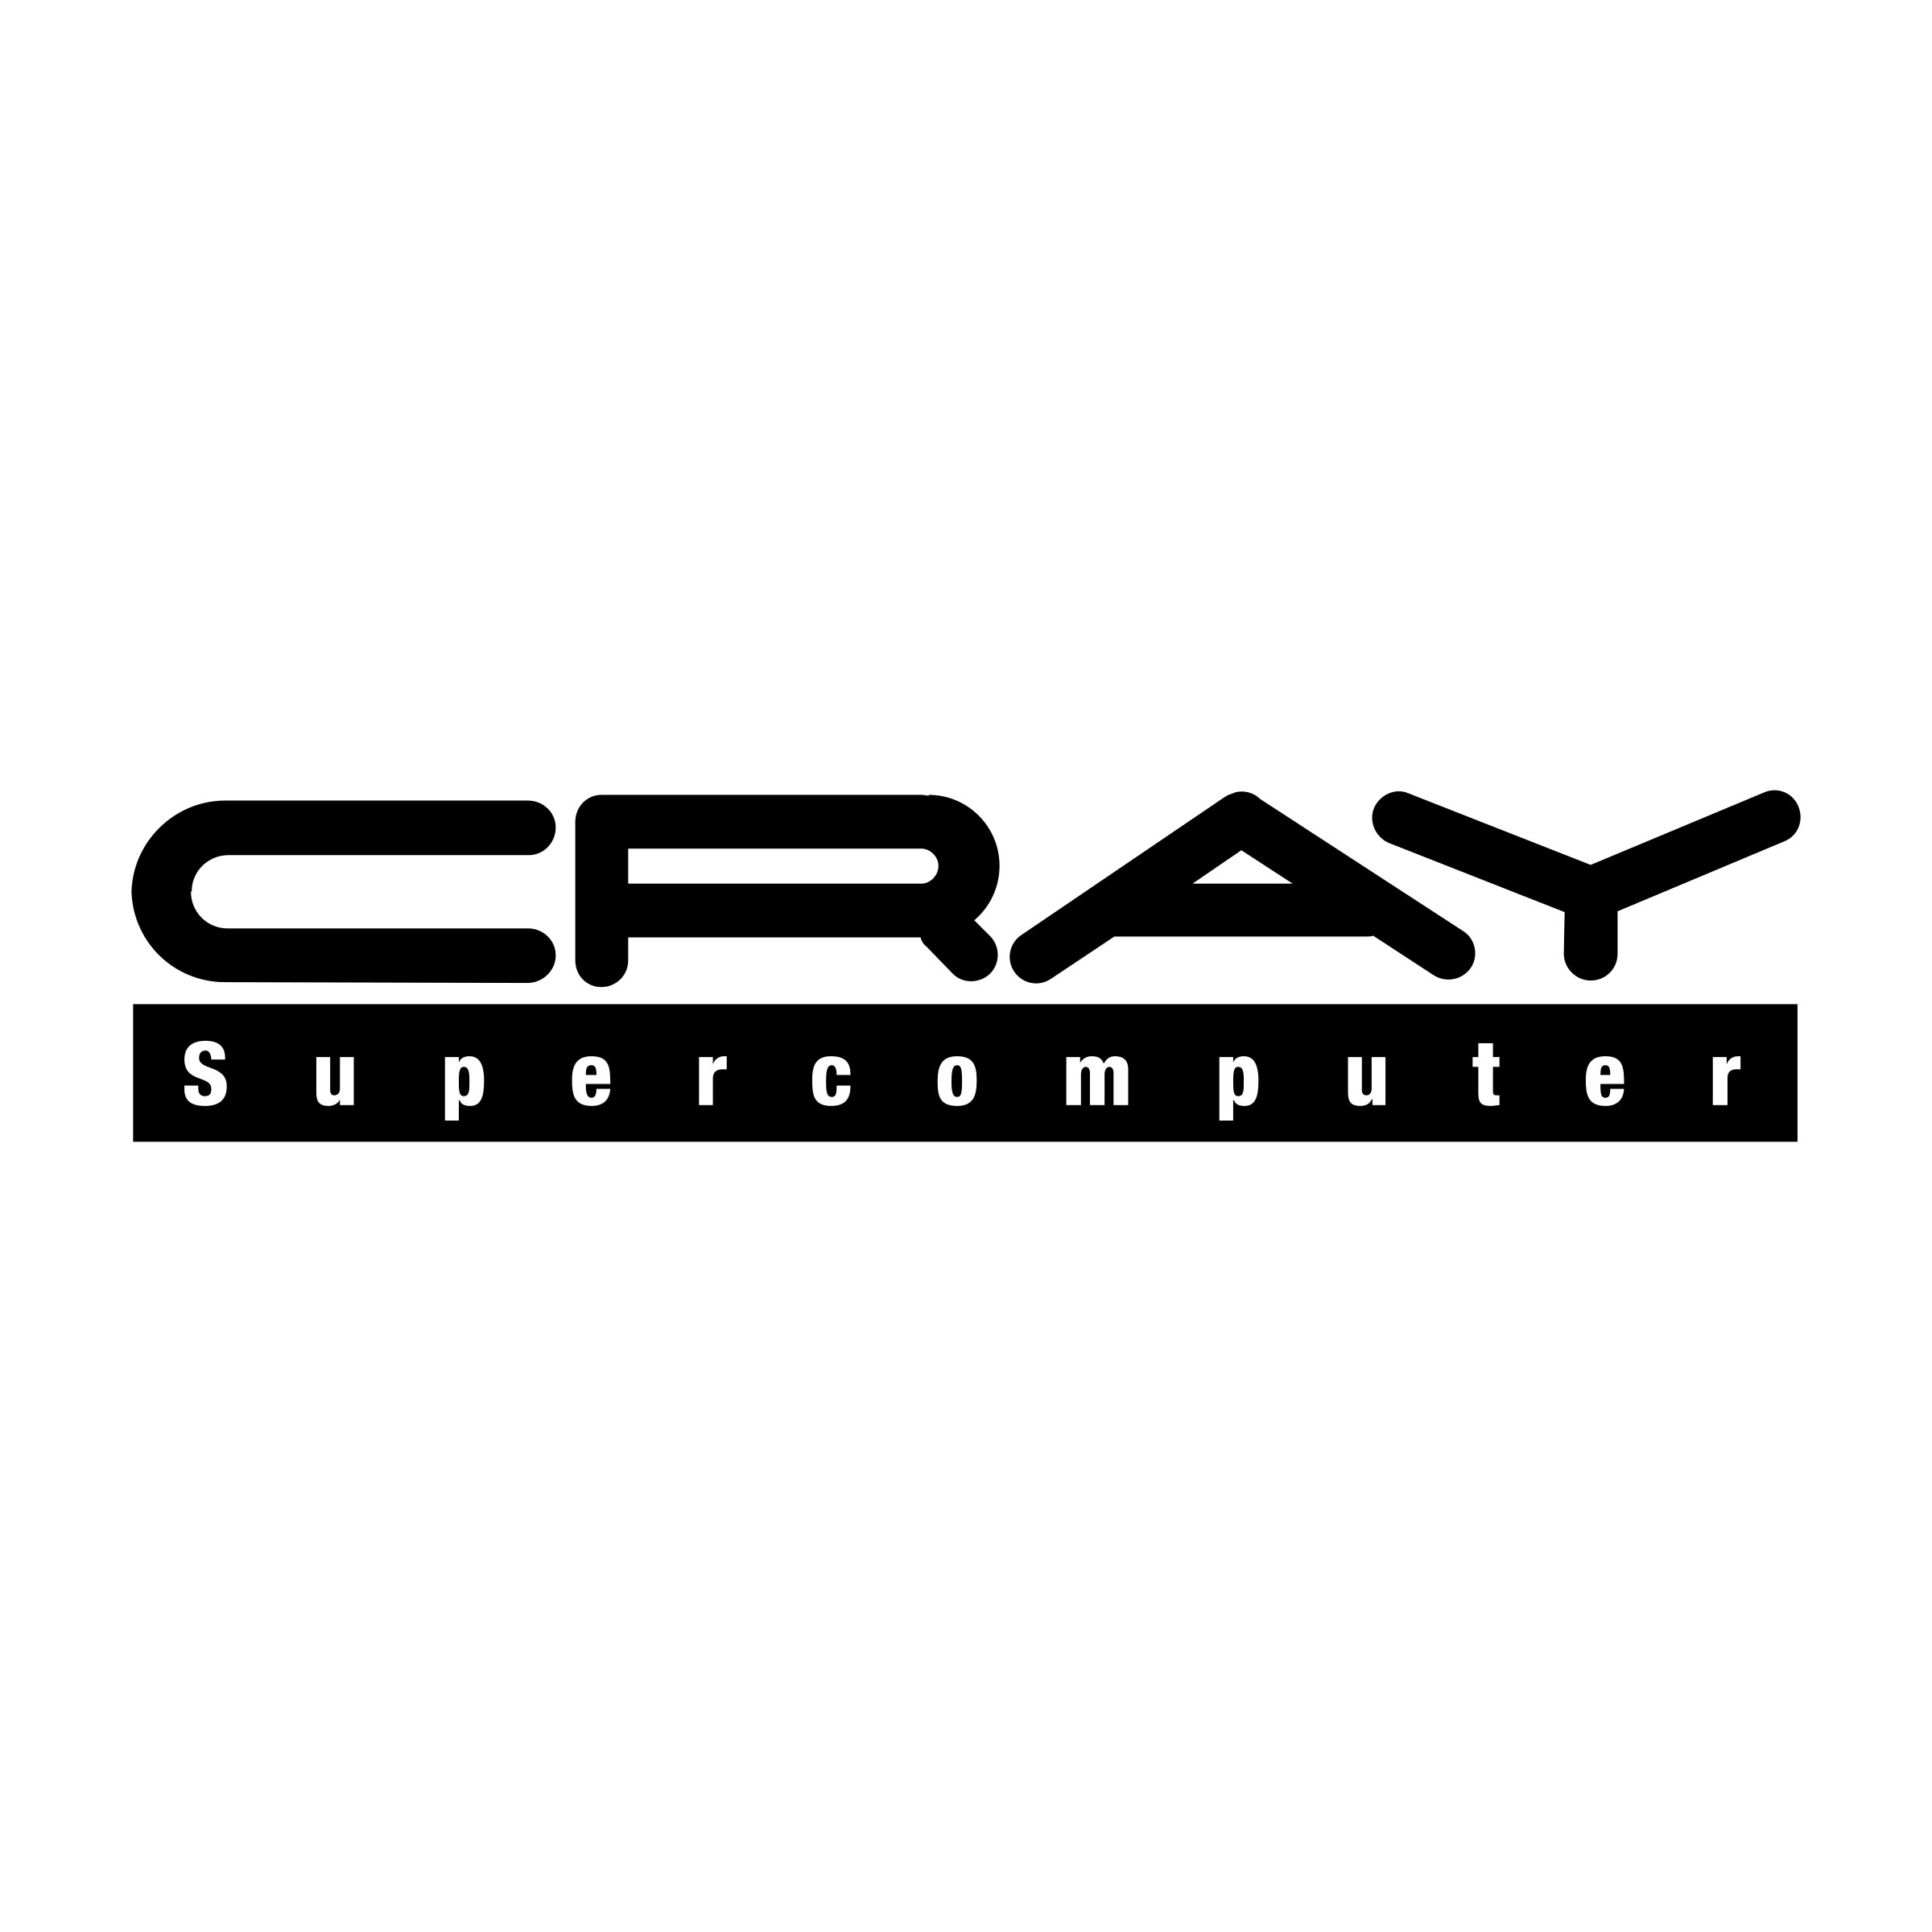 Cray Logo - Cray Supercomputer Logo PNG Transparent & SVG Vector - Freebie Supply